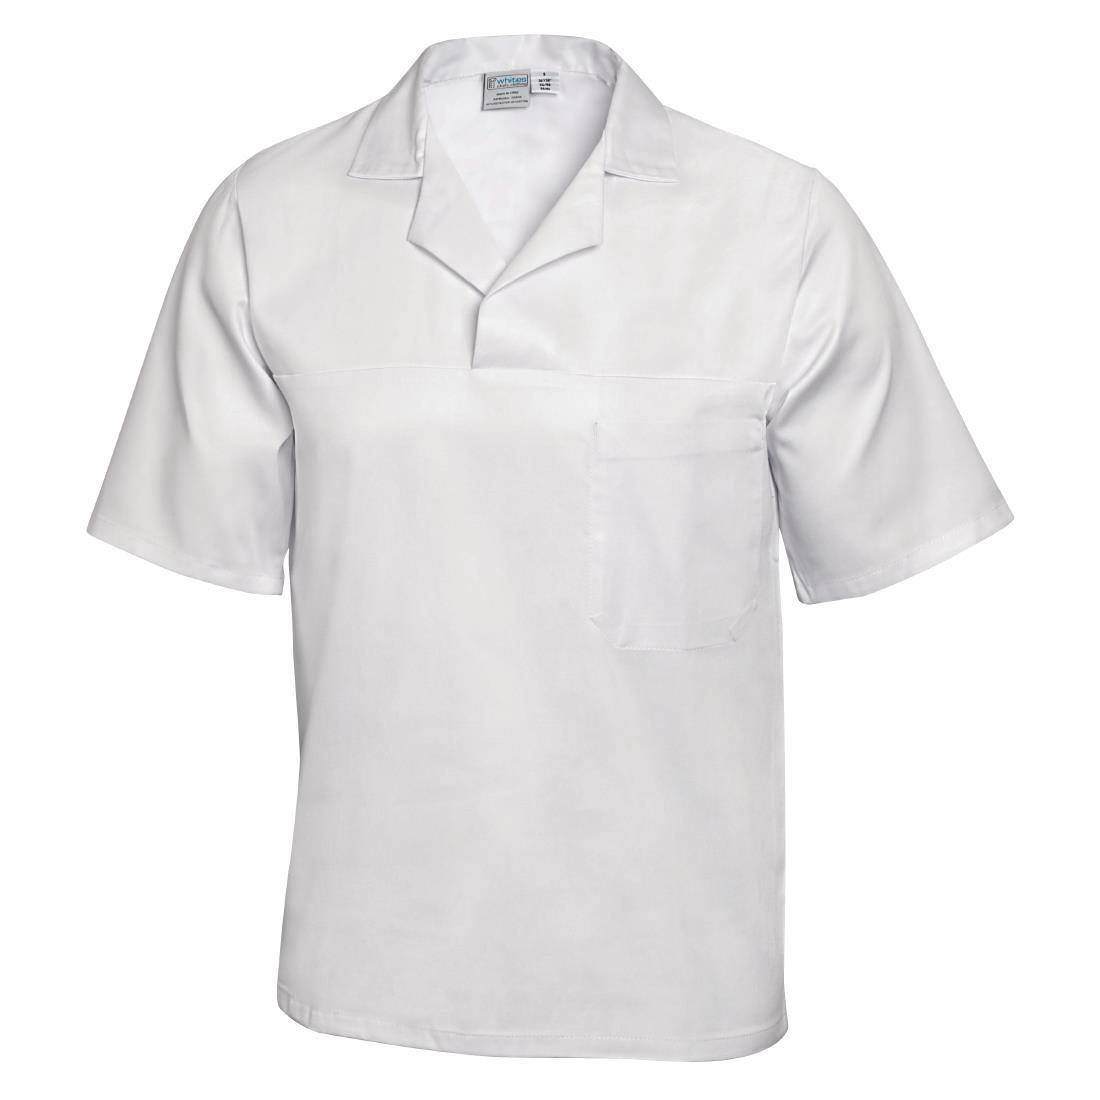 Unisex Bakers Shirt White XL - A102-XL  - 5